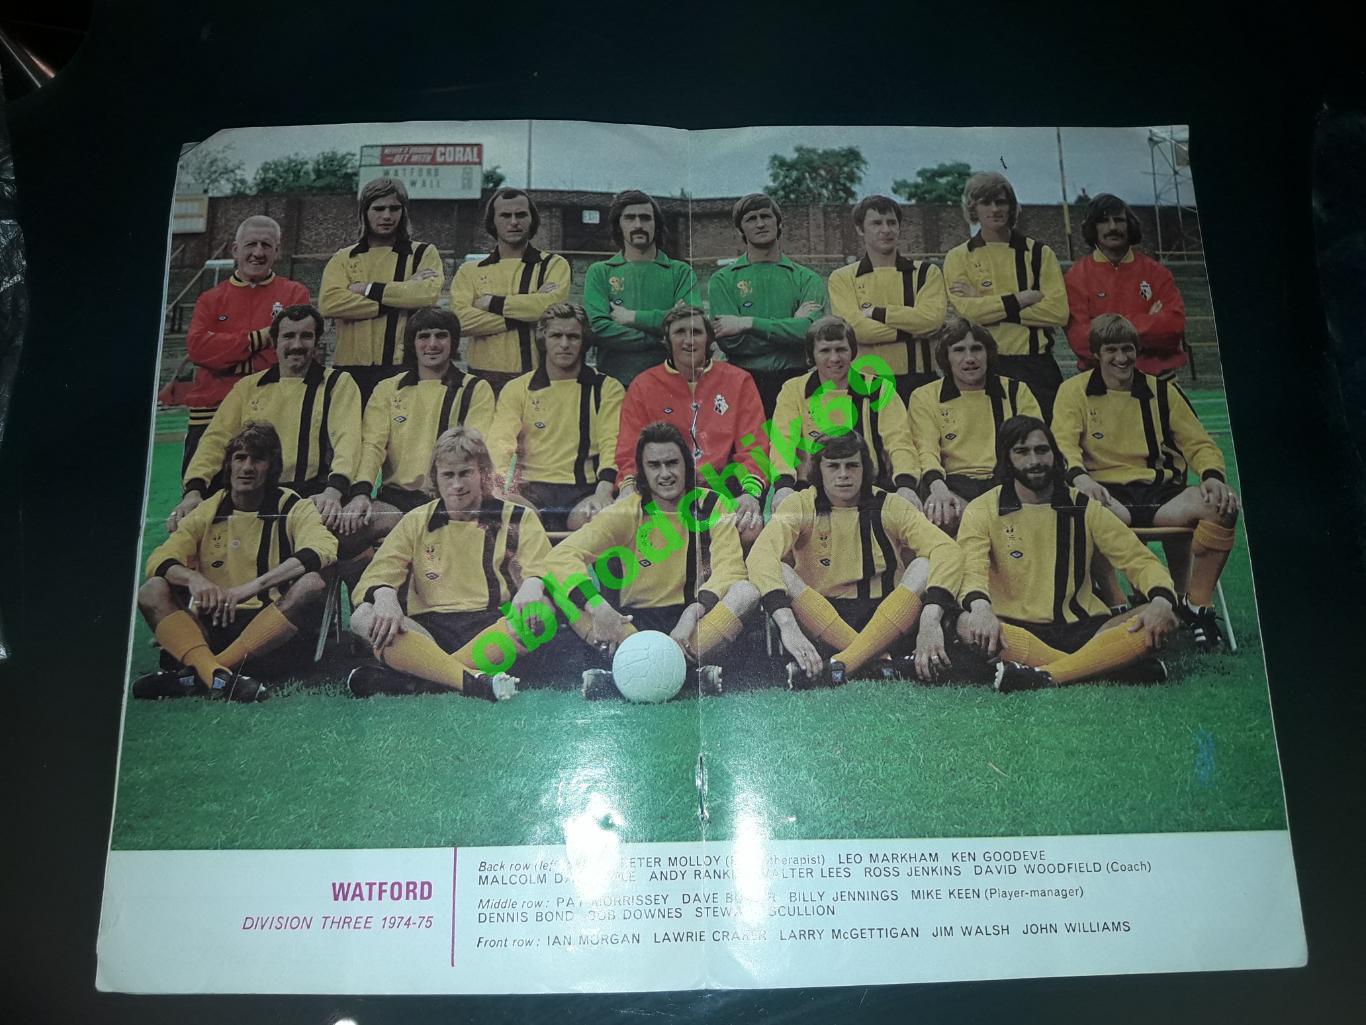 Журнал League Football сезон 1974/75 Постер Watford 1